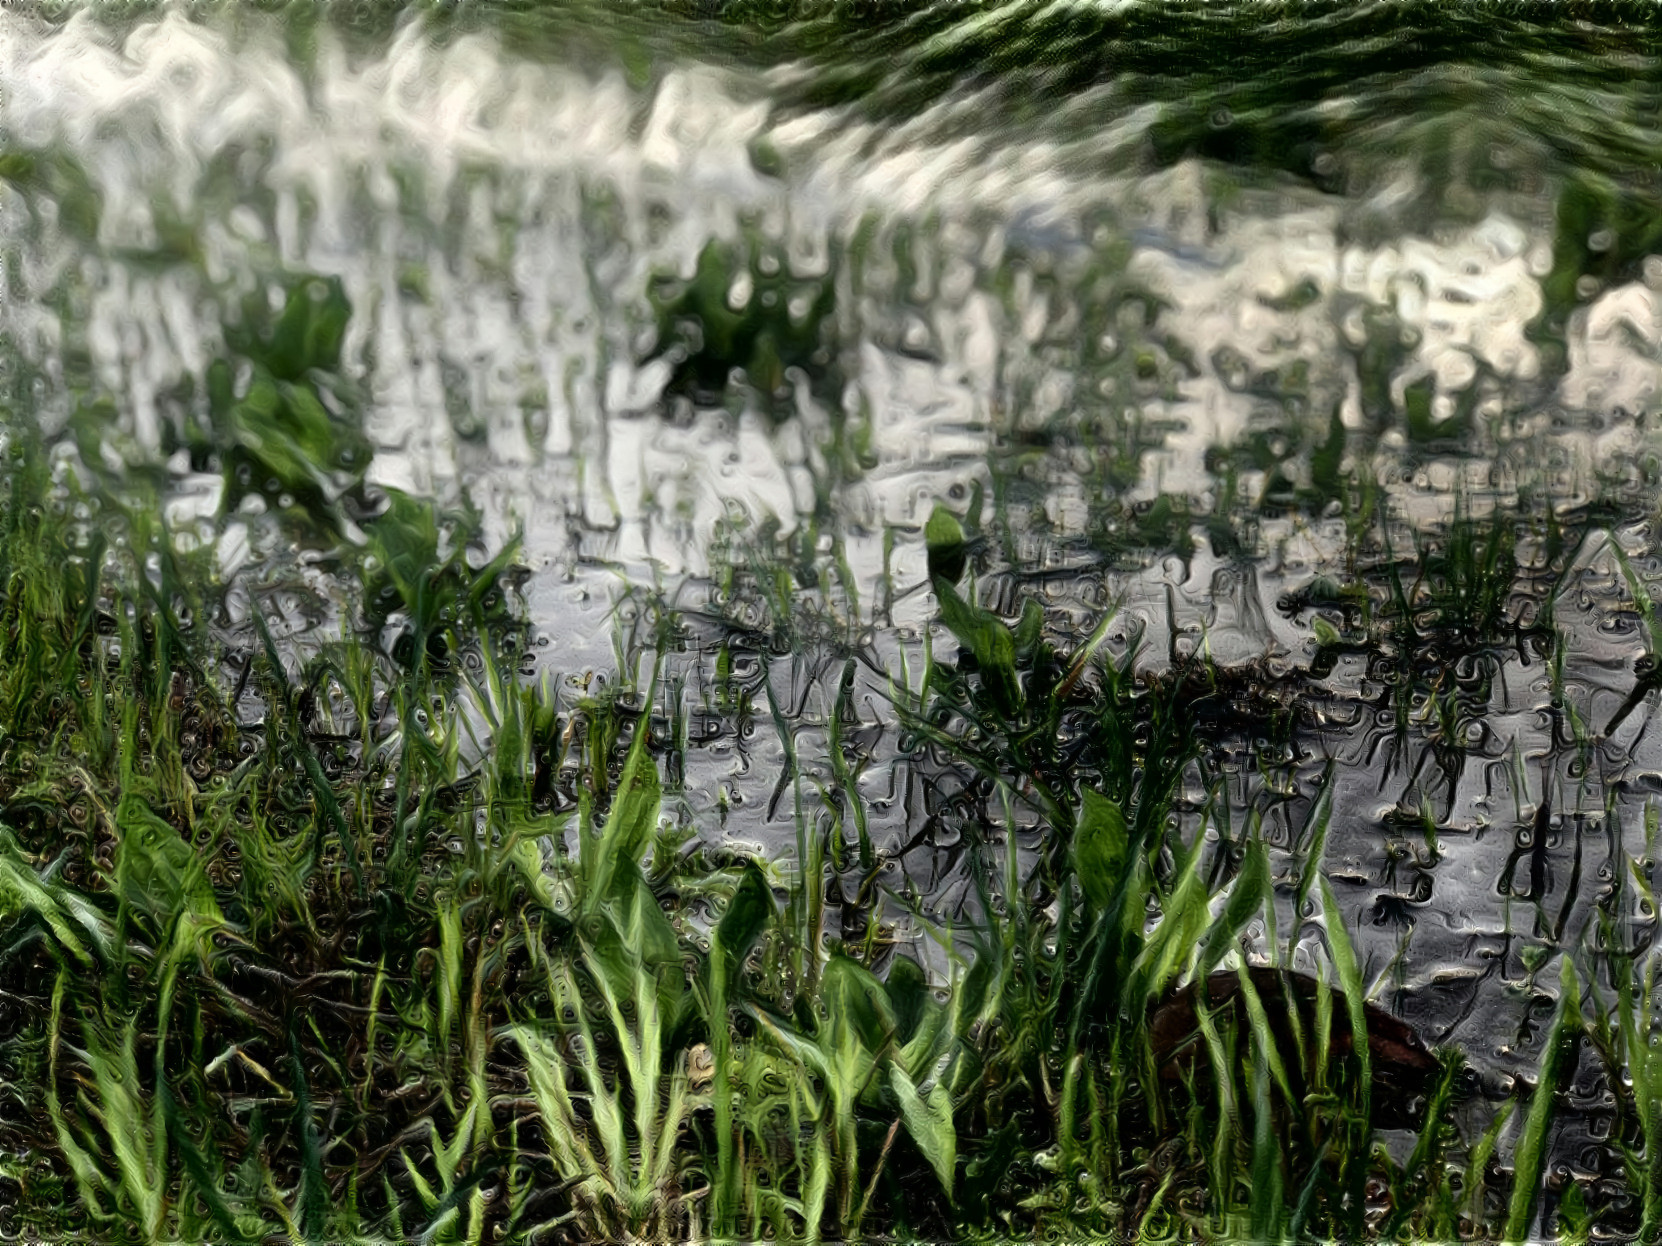 Wraith marsh in miniature